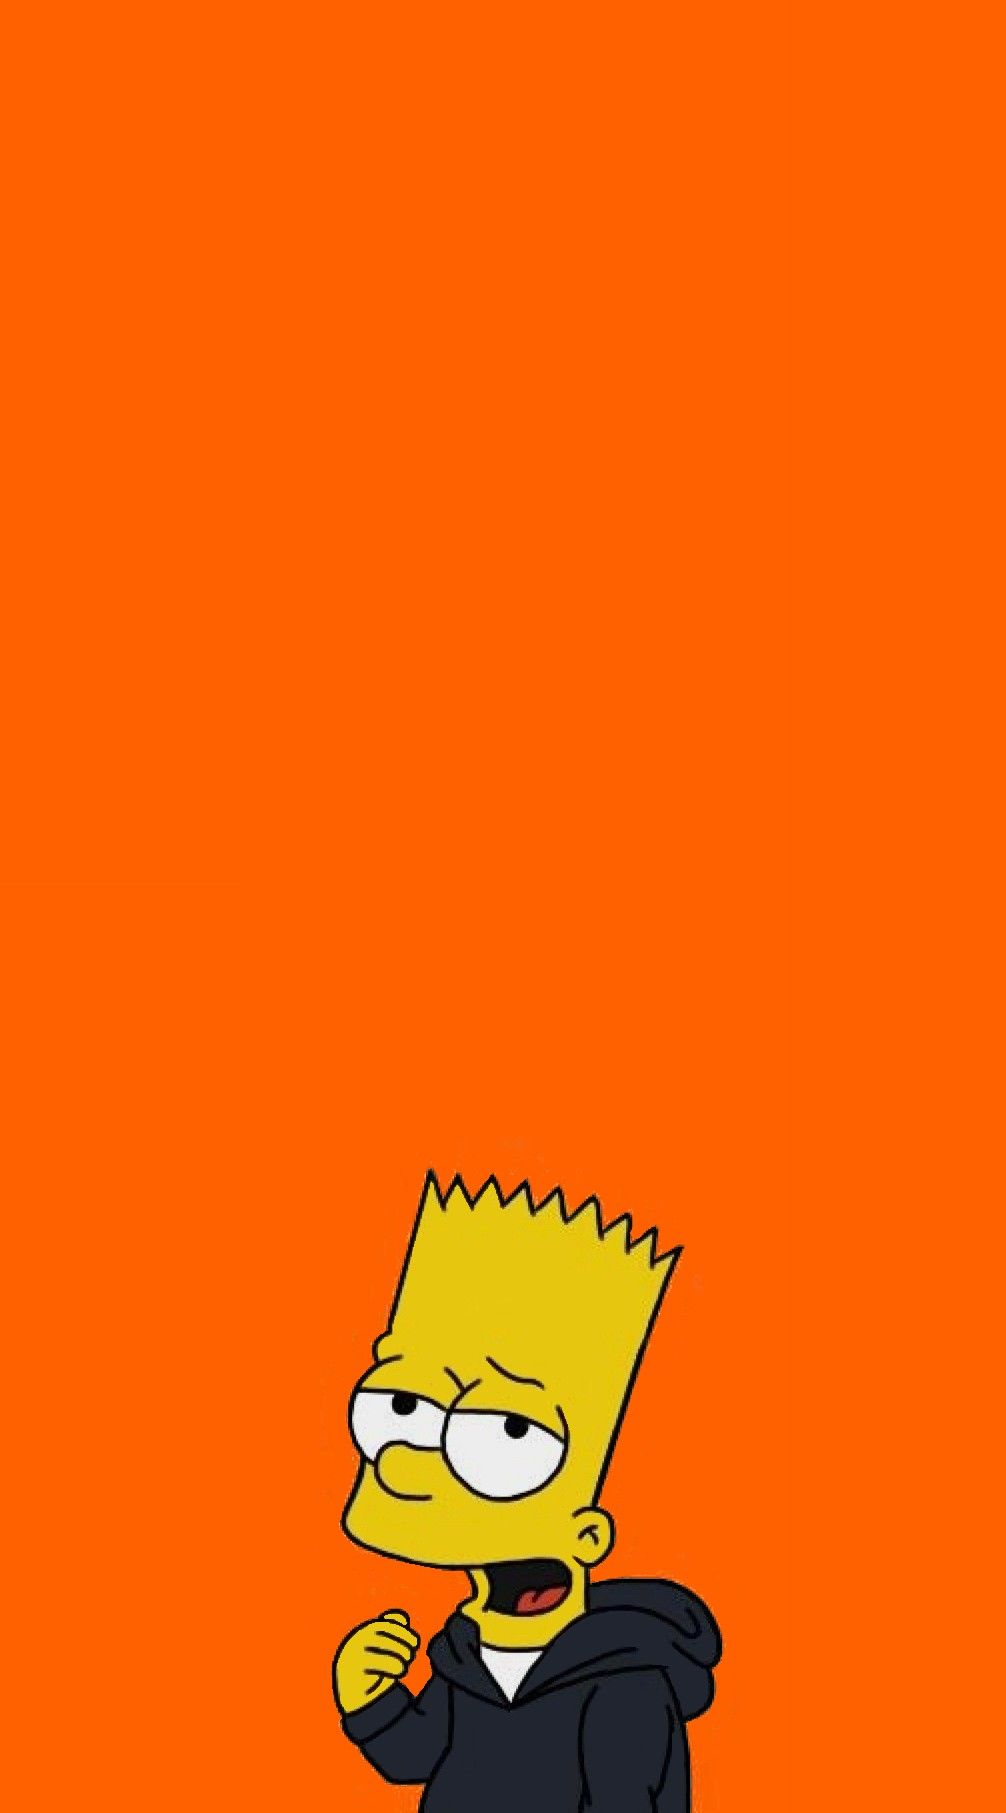 Aesthetic Bart Simpson. Simpson wallpaper iphone, iPhone wallpaper orange, Bart simpson art